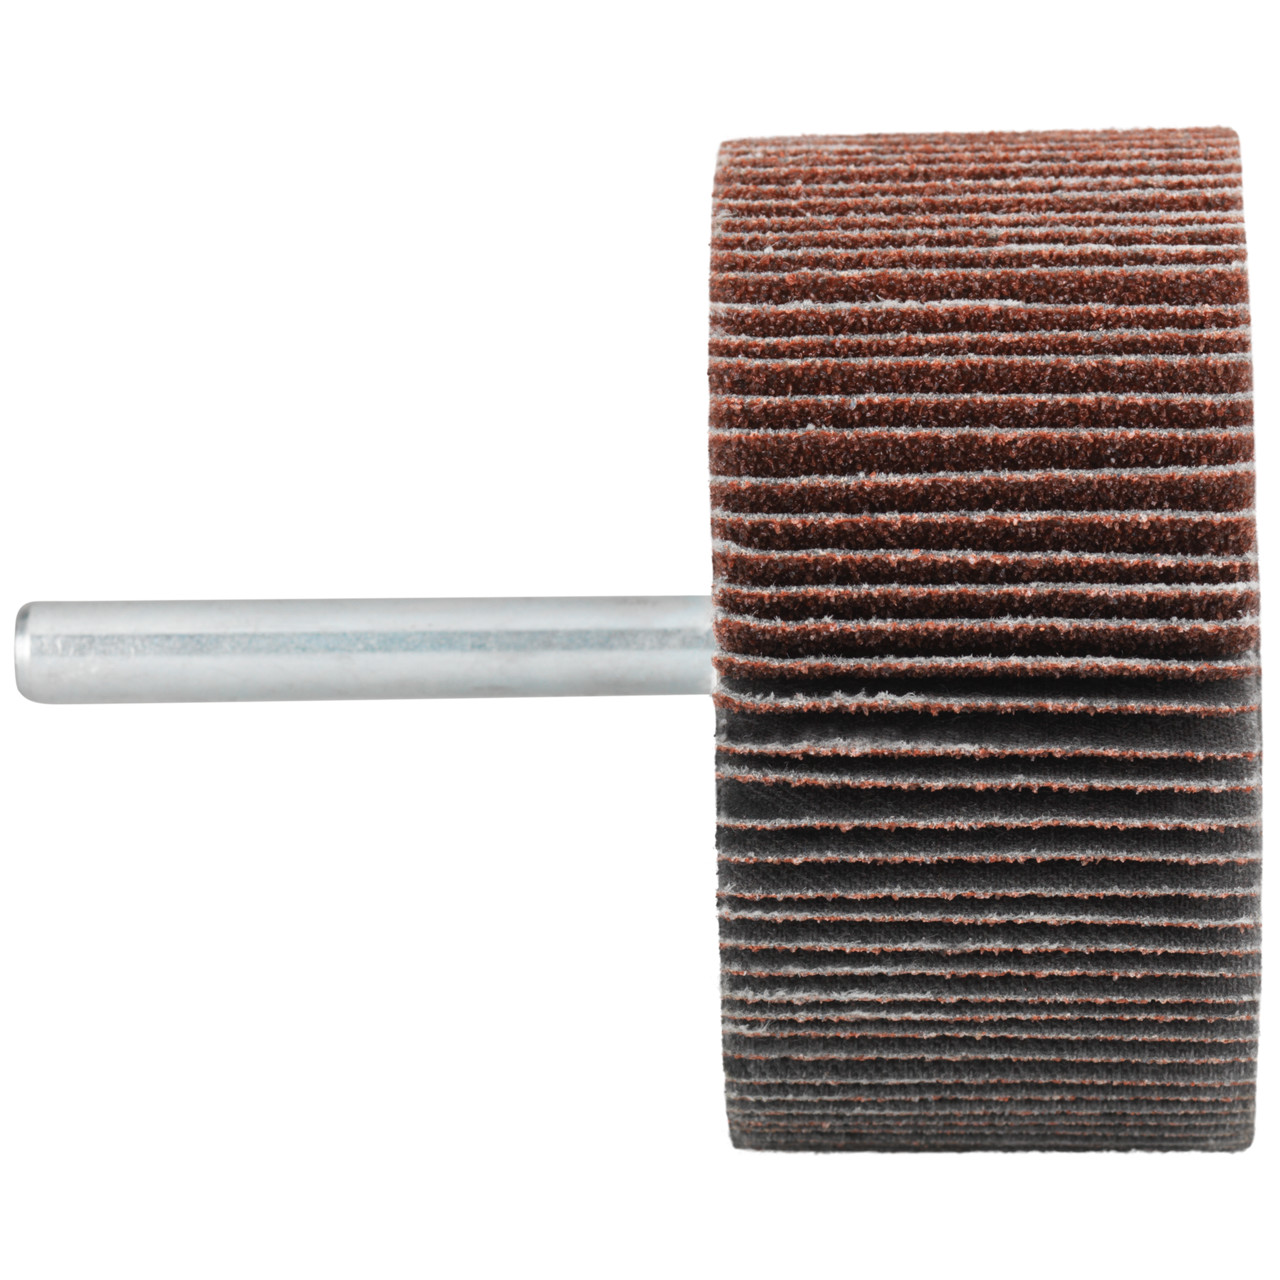 Tyrolit A-P01 C X Perni DxD 60x30 Per acciaio, acciaio inox e metalli non ferrosi, P60, forma: 52LA, Art. 816959